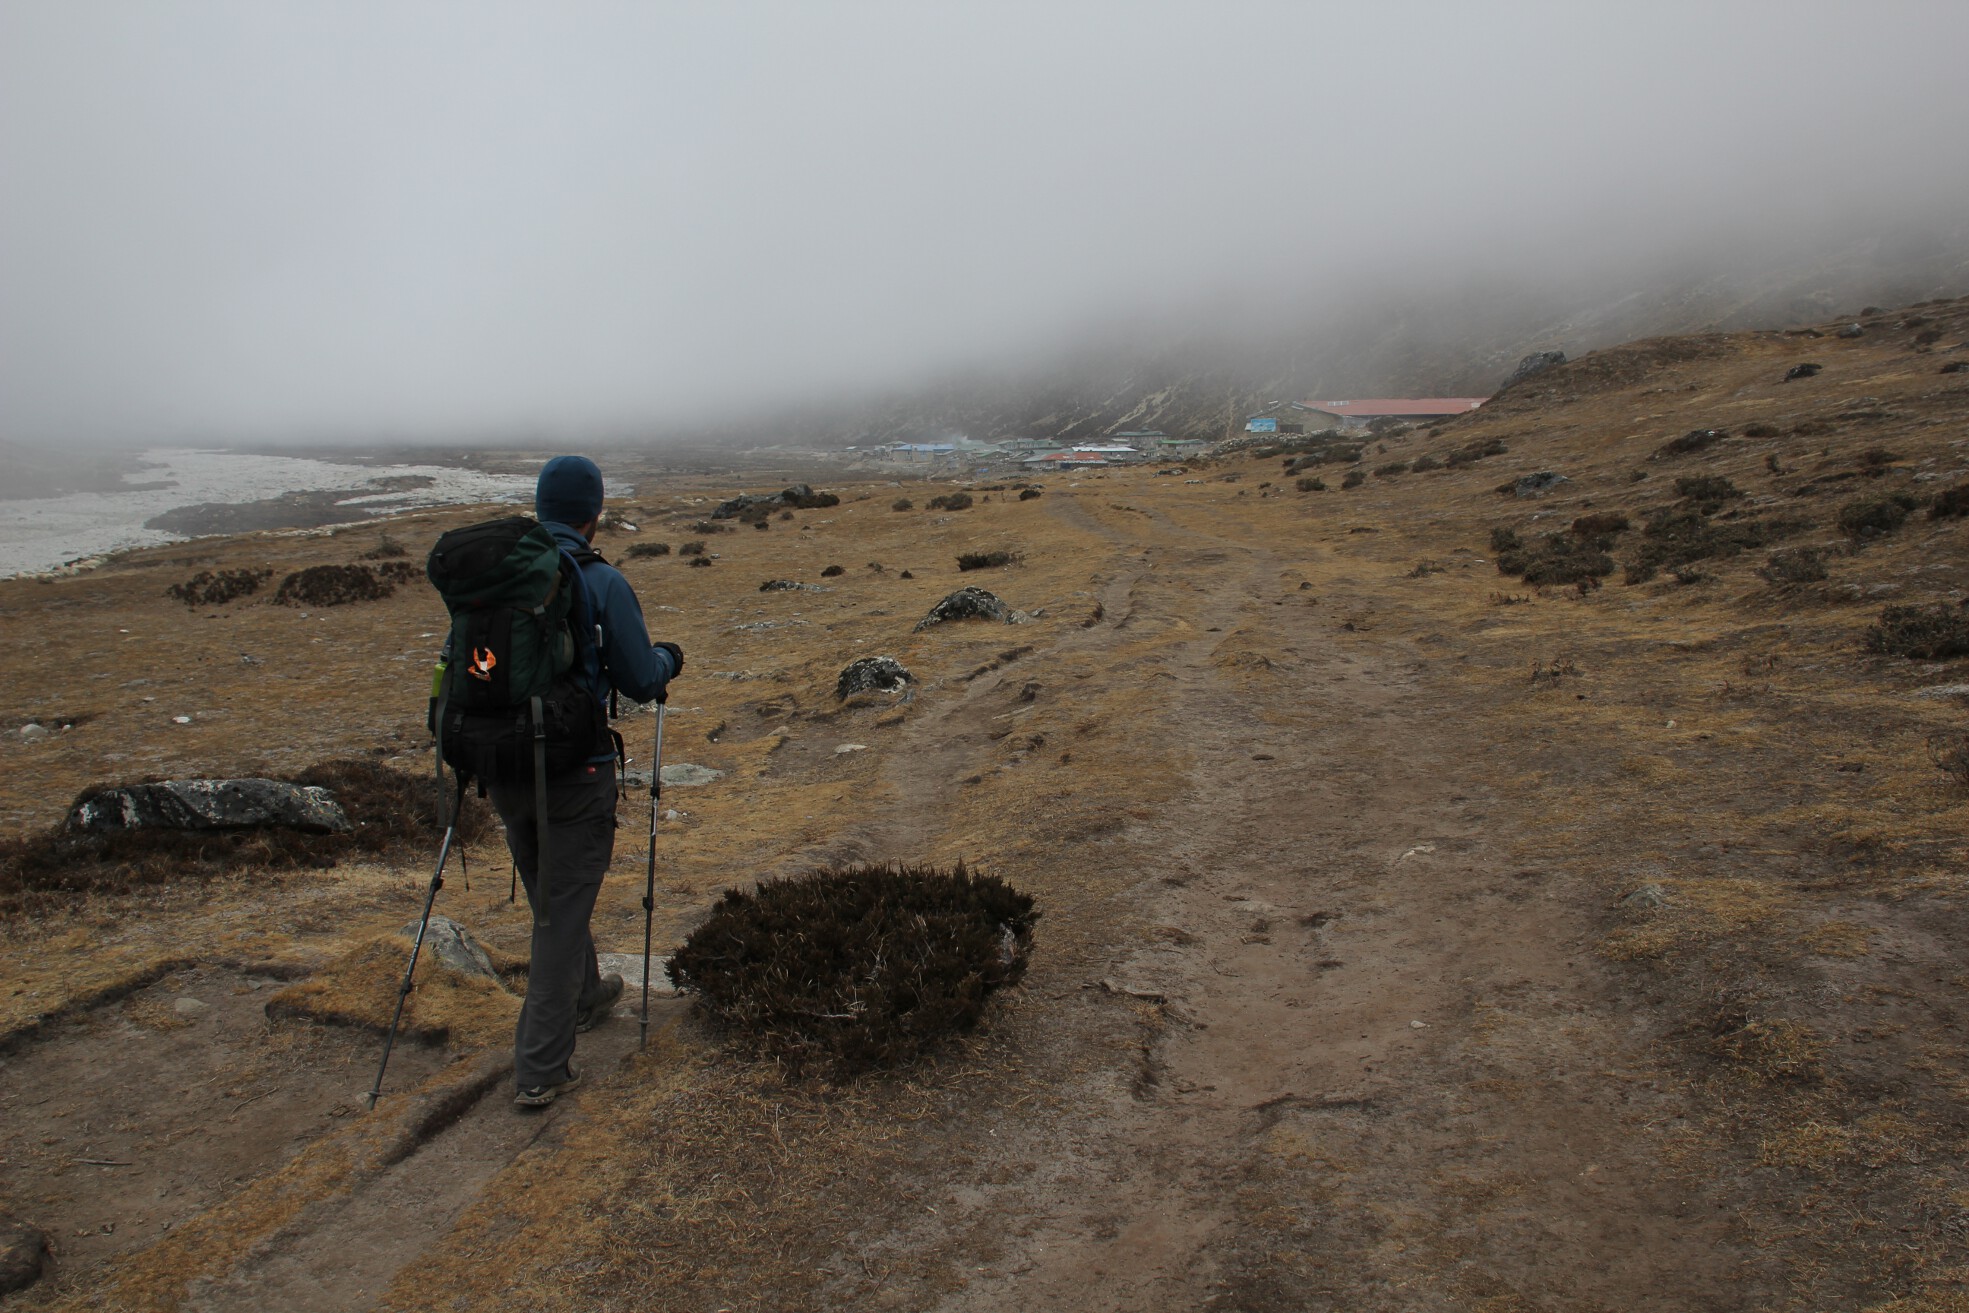 Brian becomes enveloped in fog as he walks toward Pheriche, Nepal.